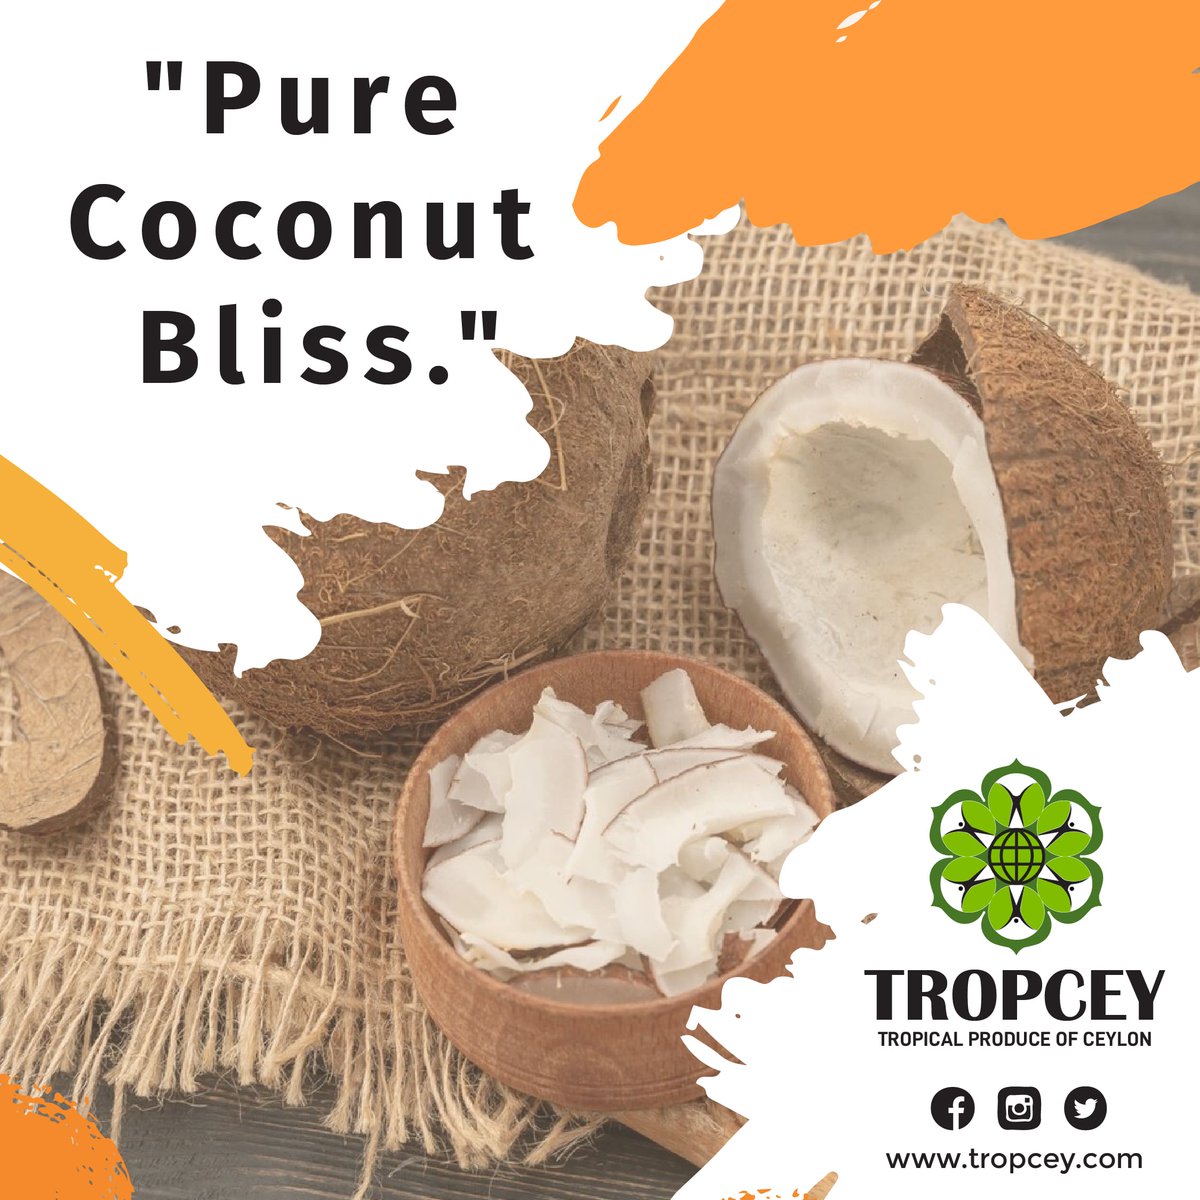 Pure Coconut Bliss 🌴🥥
#purecoconut #tropceyexport #madeinsrilanka #coconutoil #coconutwater #coconutmilk #coconutchips #coconut #coconutproducts #coconutindustry #tropical